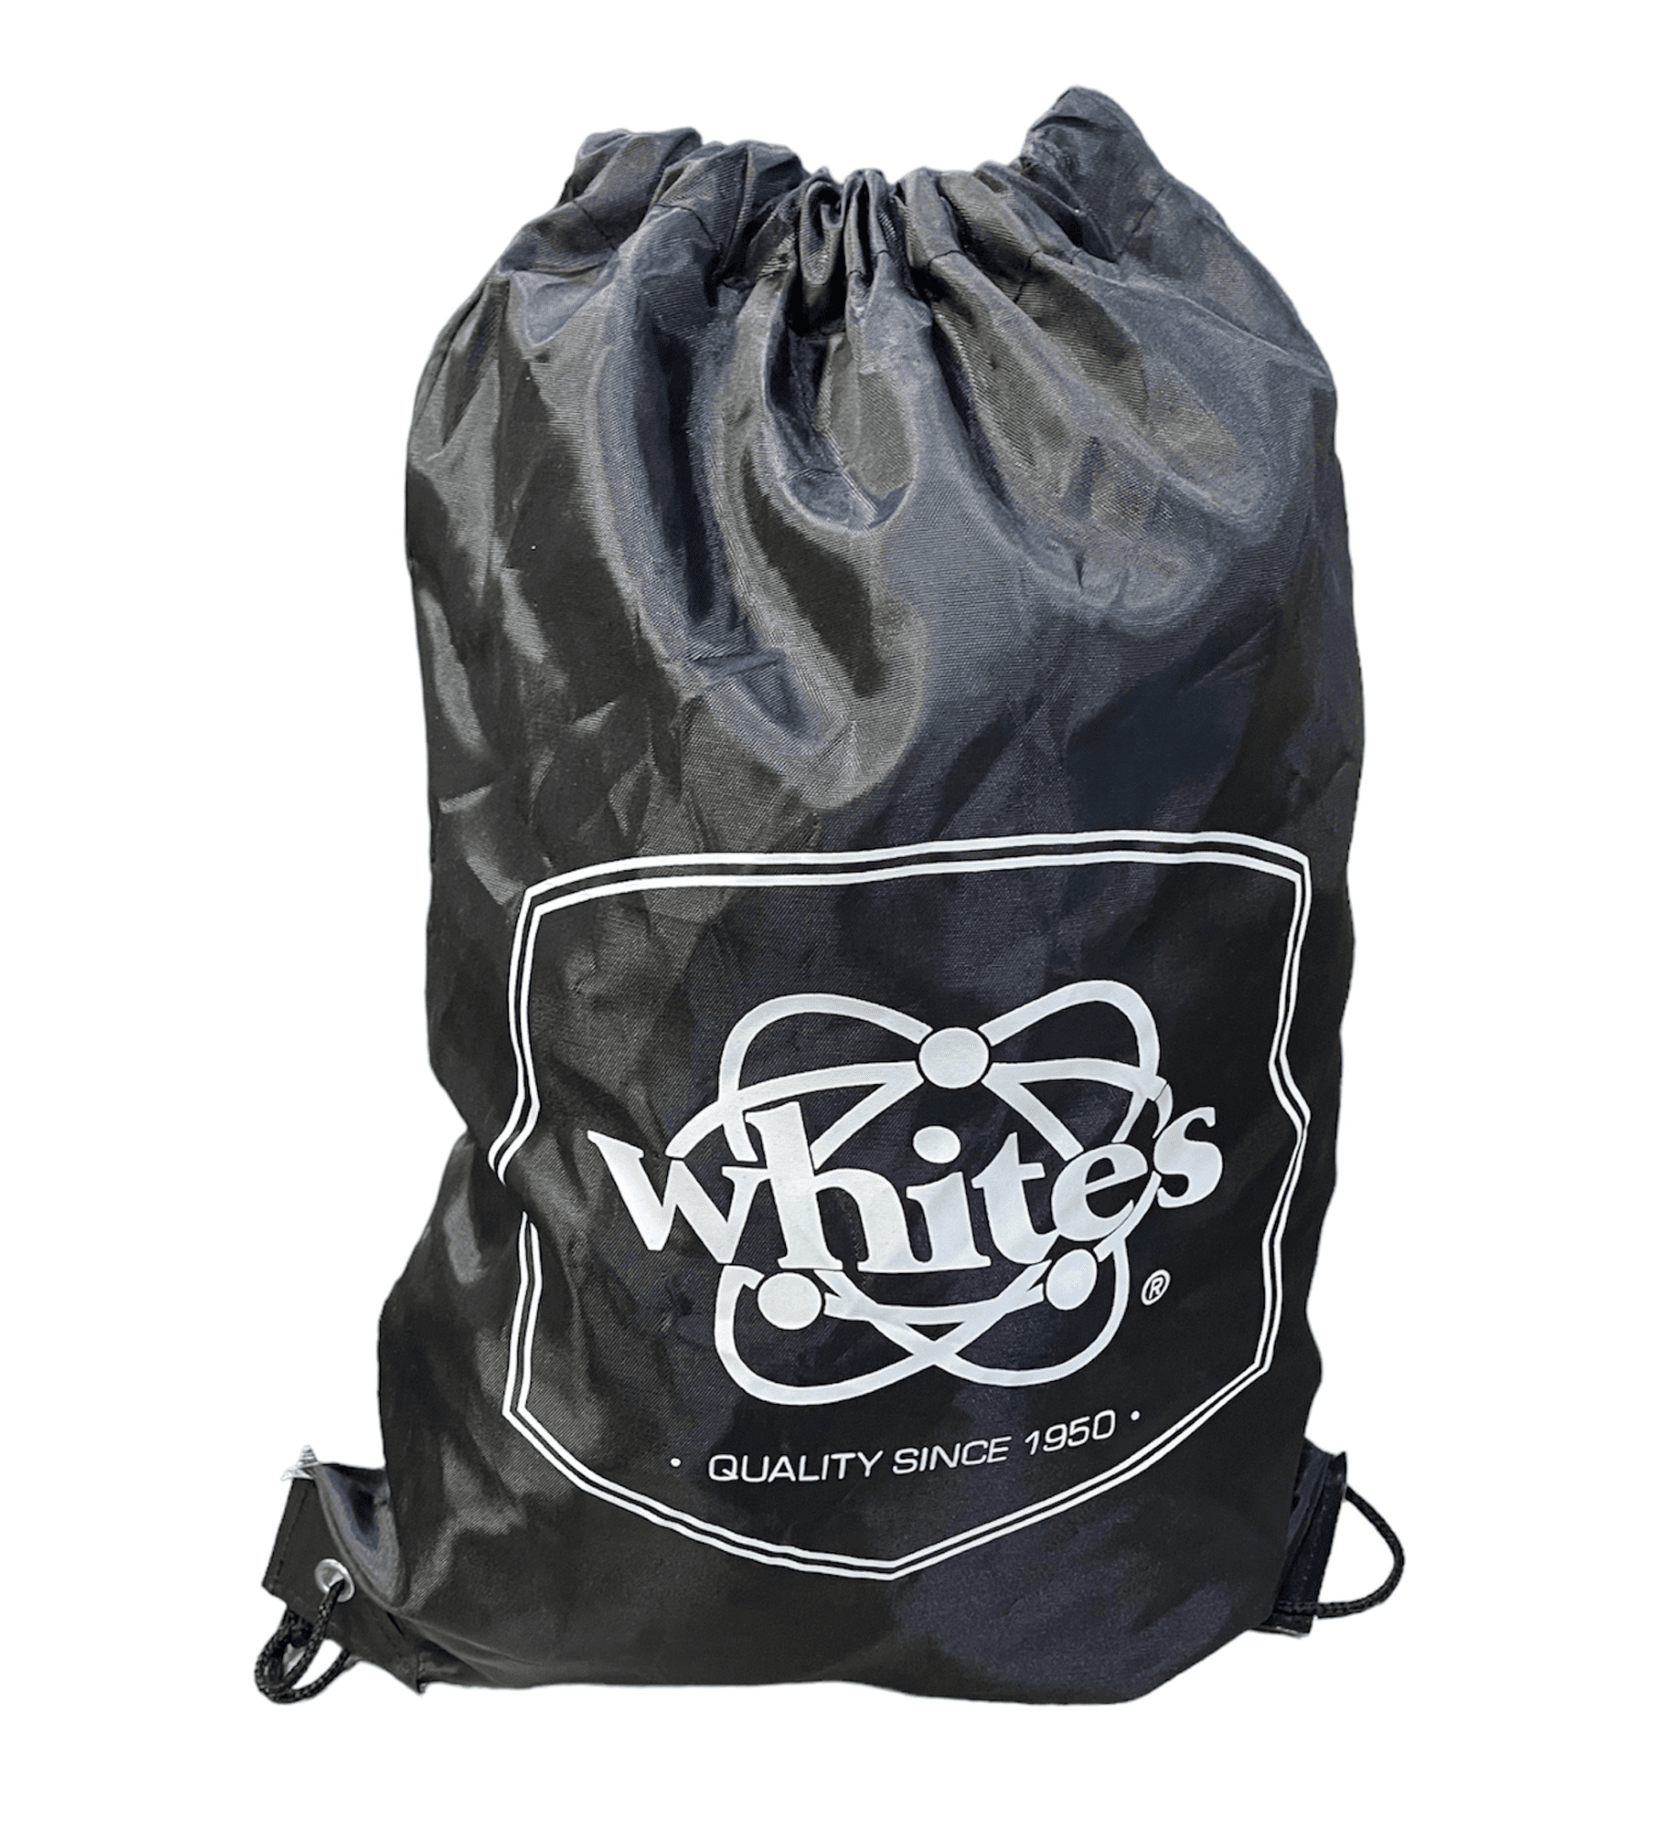 New Closeout - Whites Drawstring Bag/Light Backpack